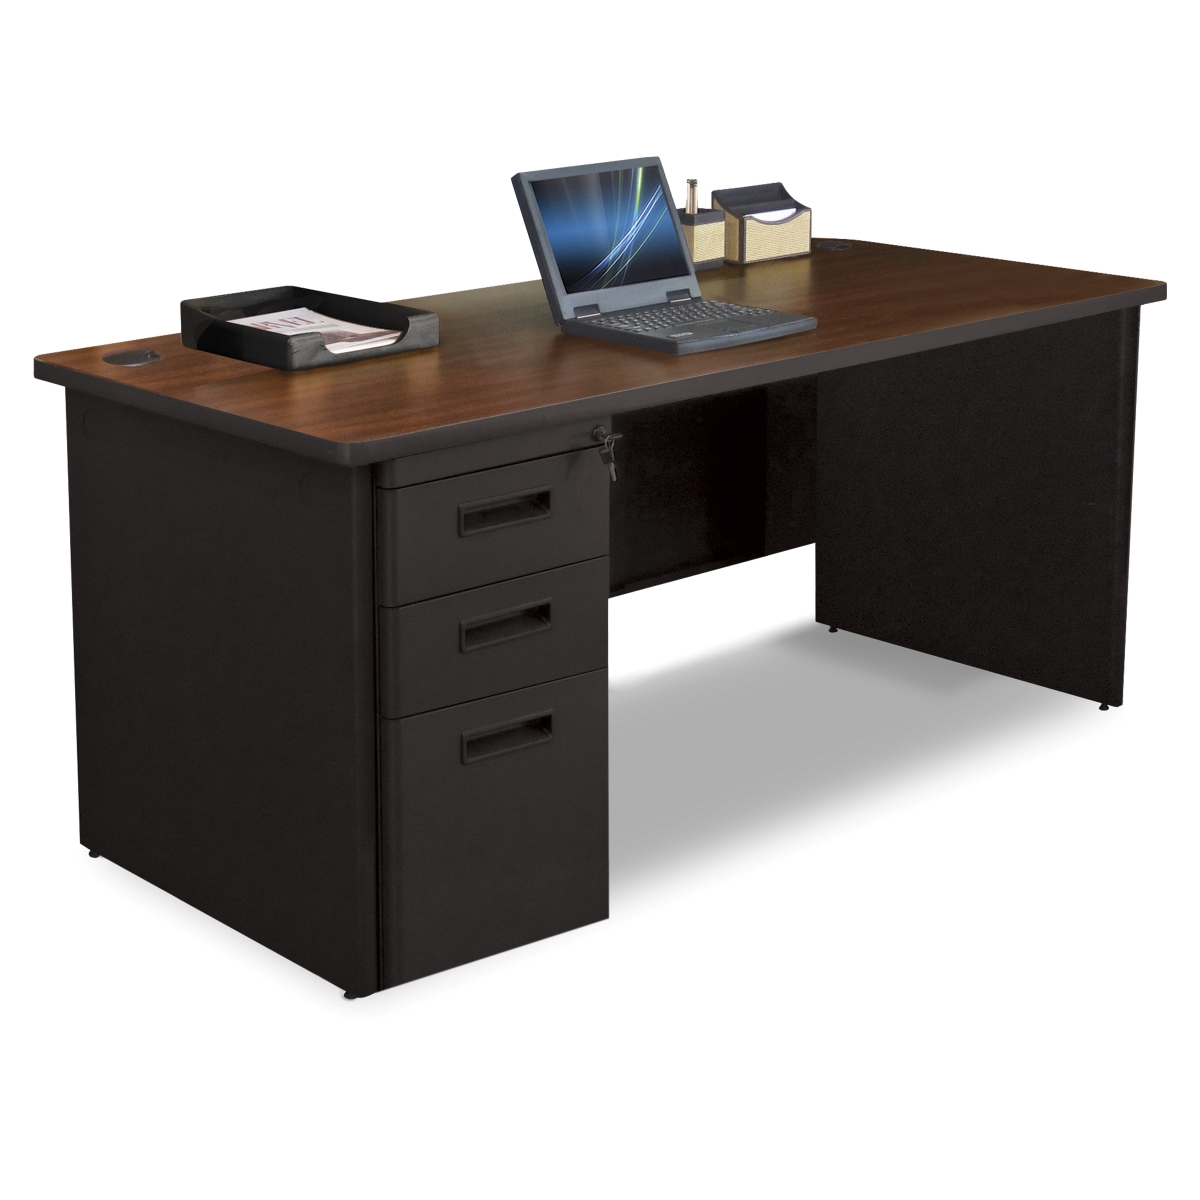 Pdr6630sp-b-dt-madn 66w X 30 D Single Full Pedestal Desk, Mahogany Laminate & Dark Neutral Finish